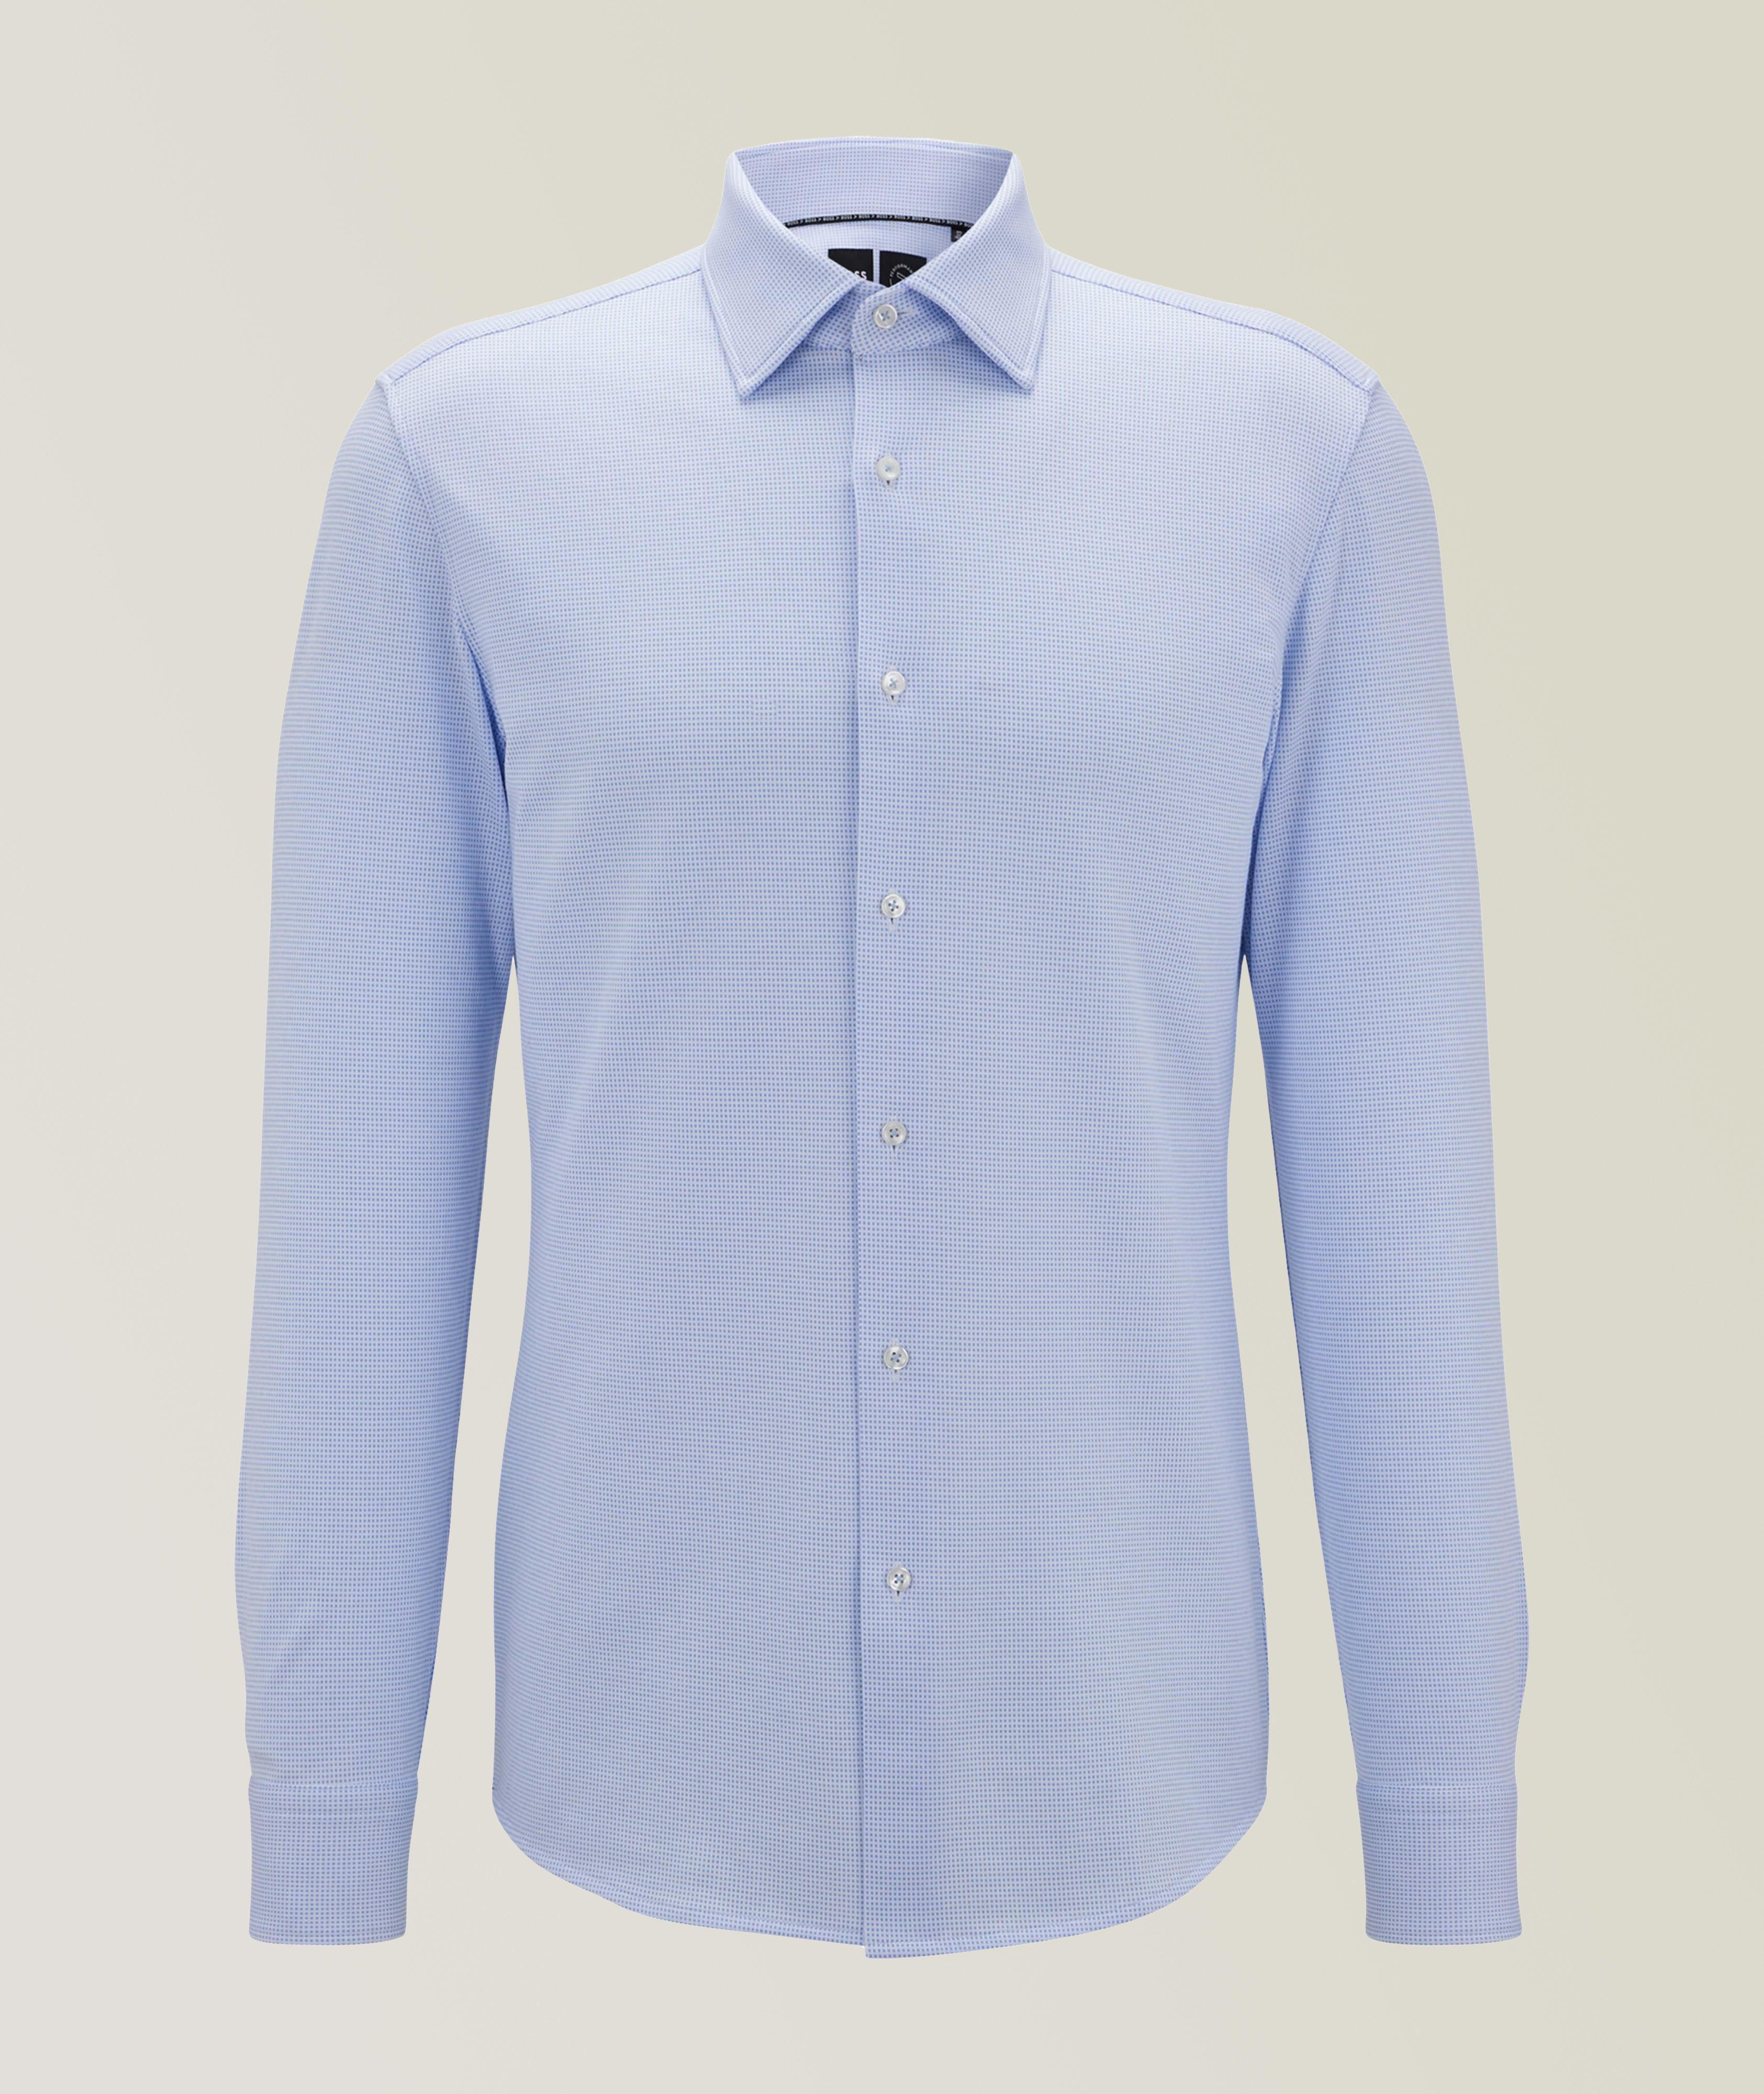 Slim-Fit Jersey Cotton Blend Dress Shirt  image 0